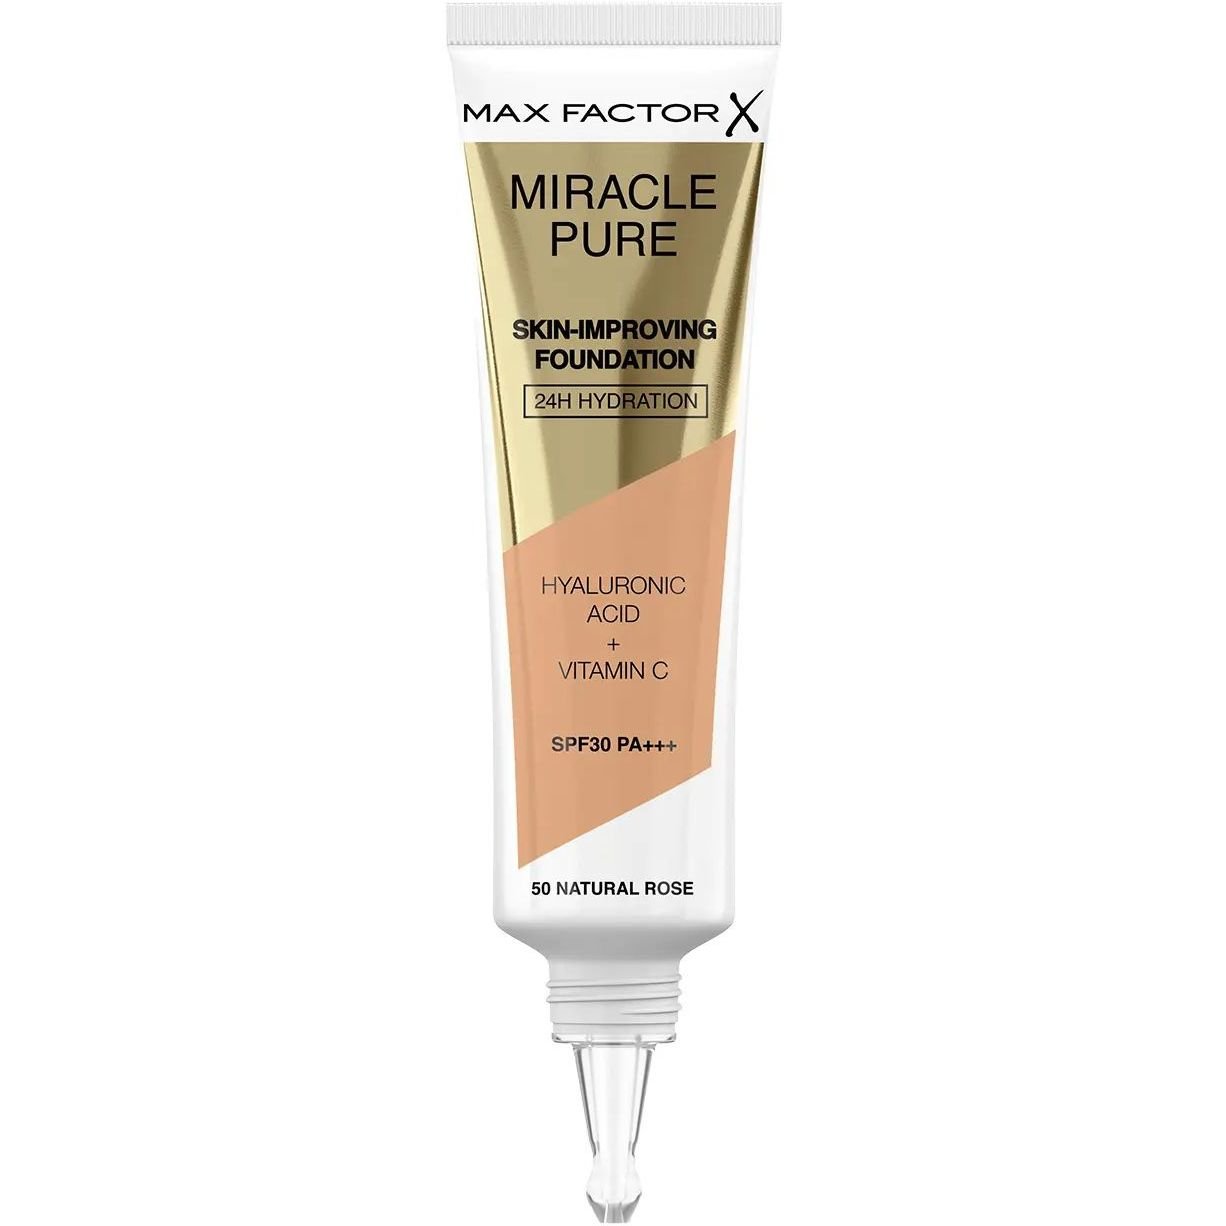 Тональная основа Max Factor Miracle Pure Skin-Improving Foundation SPF30 тон 050 (Natural Rose) 30 мл - фото 2